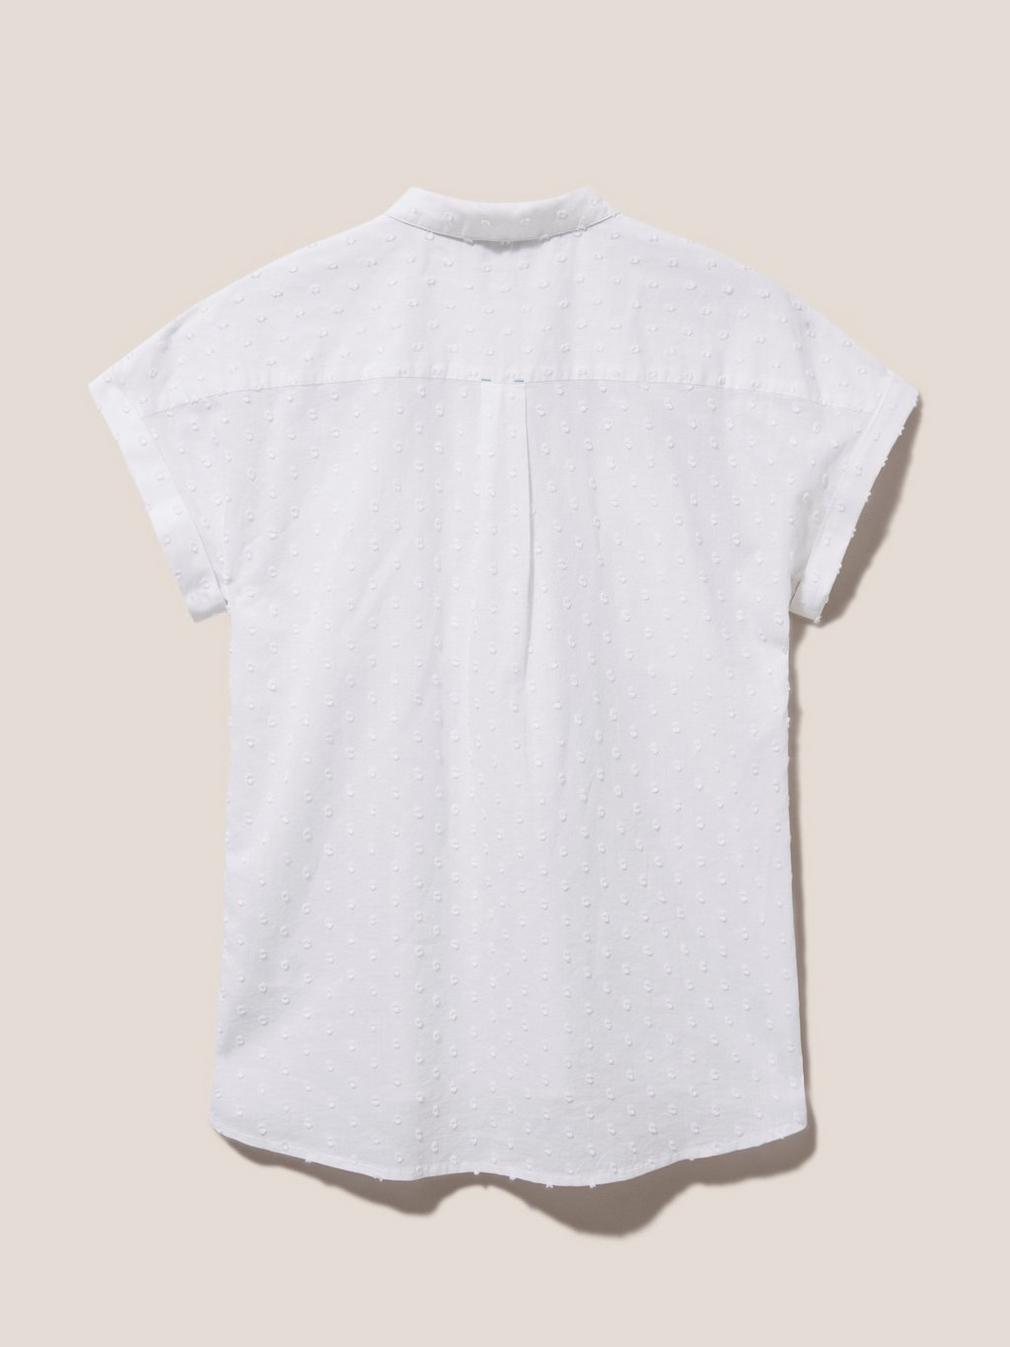 Ella Organic Cotton Shirt in PALE IVORY - FLAT BACK